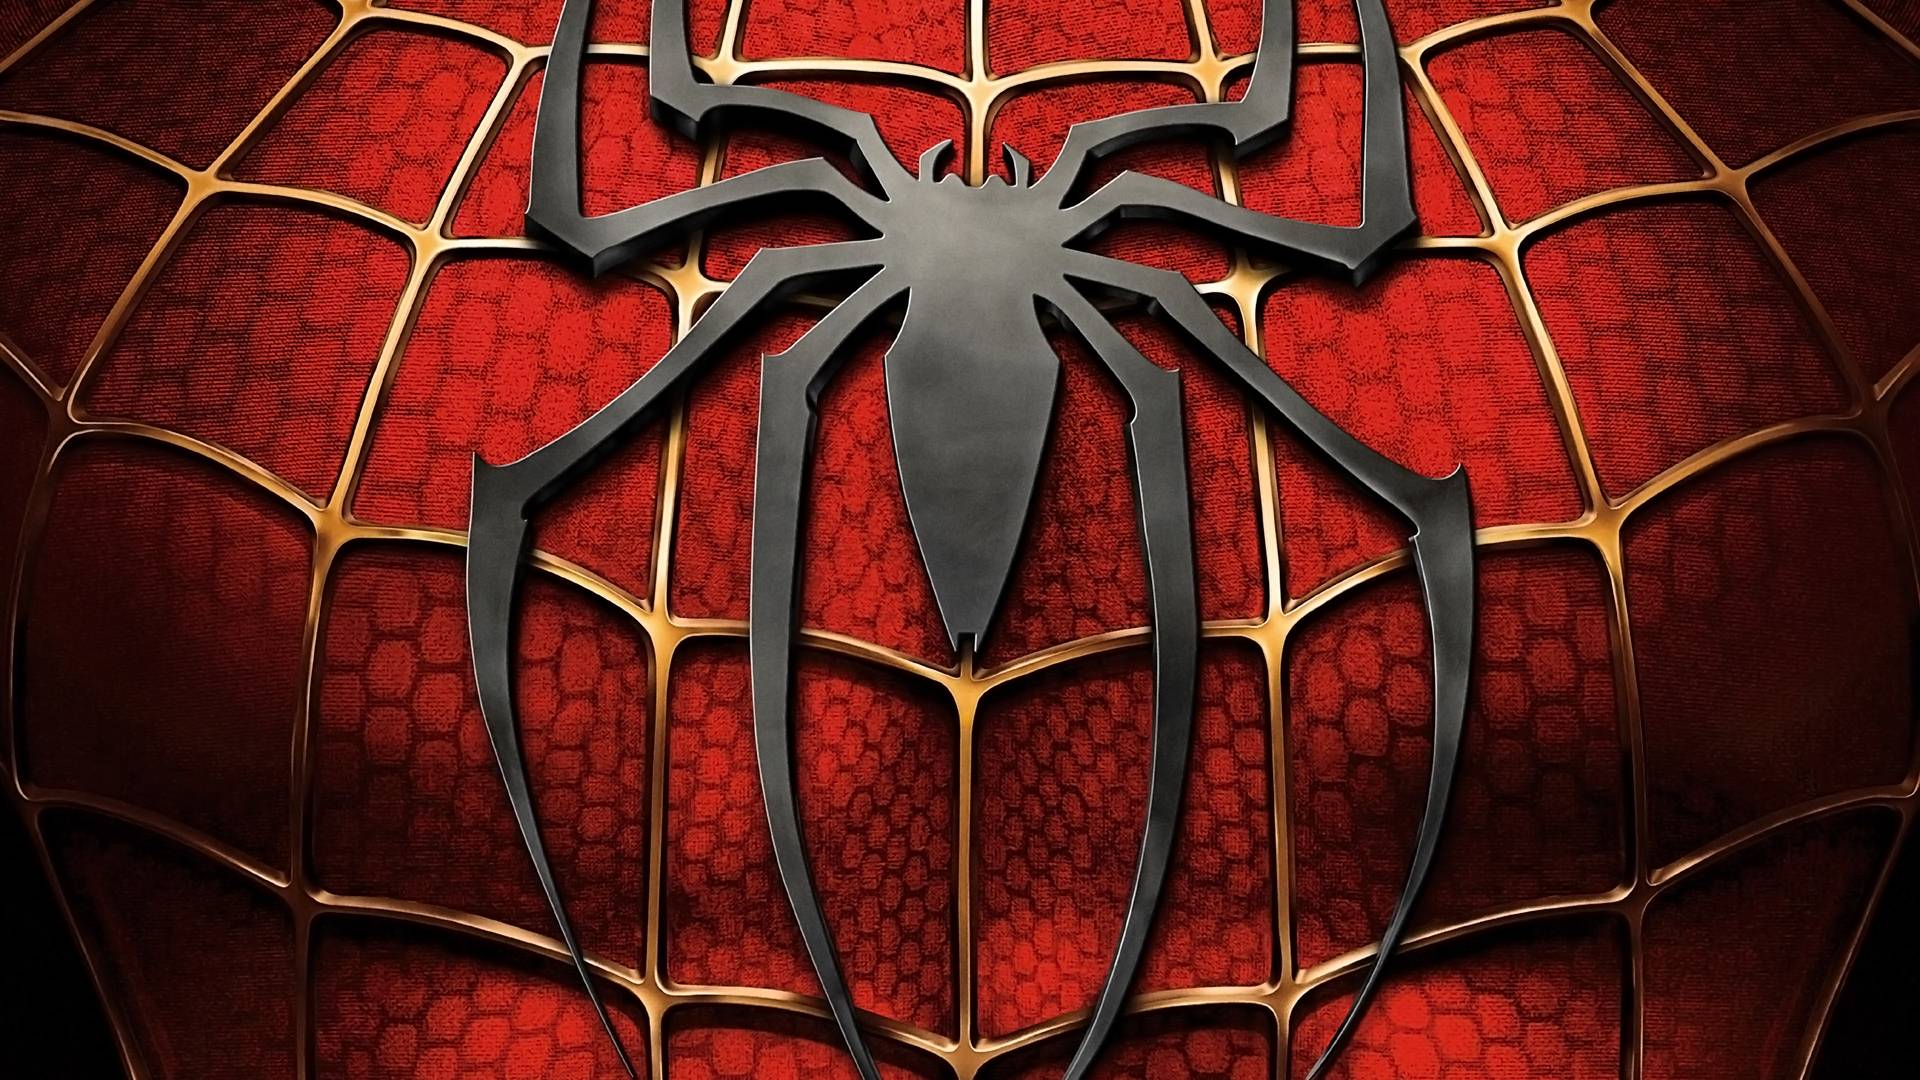 Spiderman 3 Wallpaper Hd 5 10.10.2014 Top Wallpaper Best